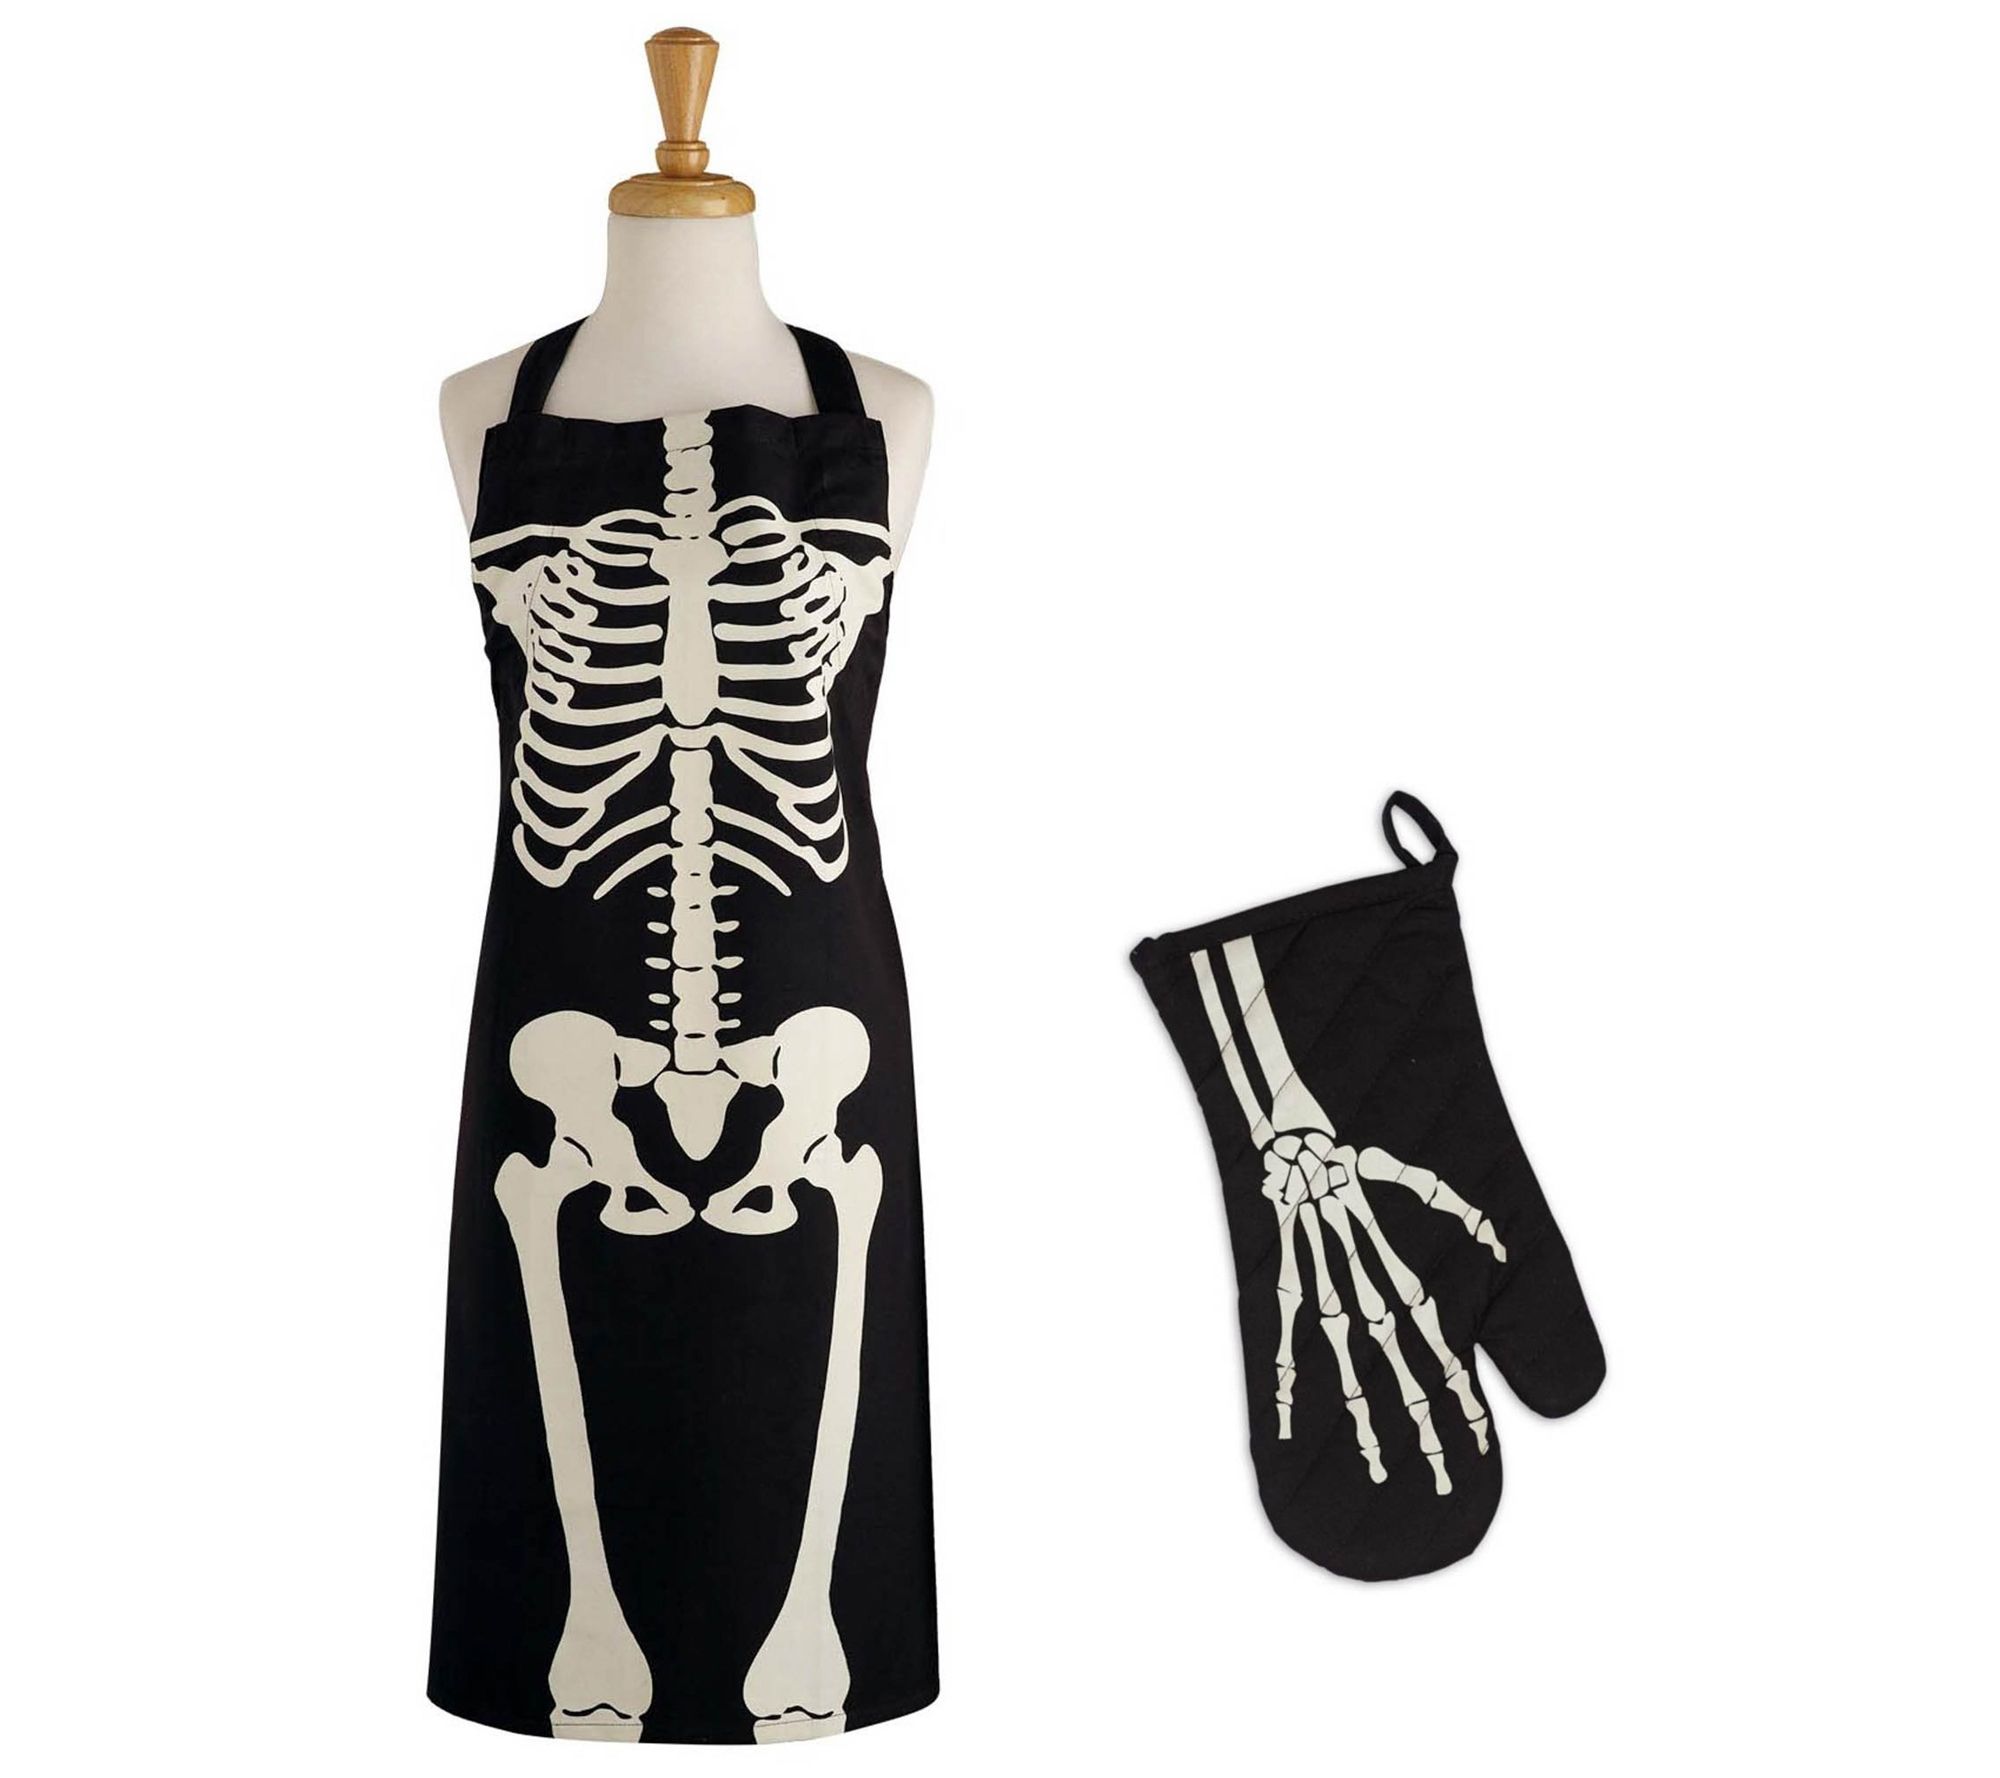 Design Imports Skeleton Apron and Oven Mitt Set